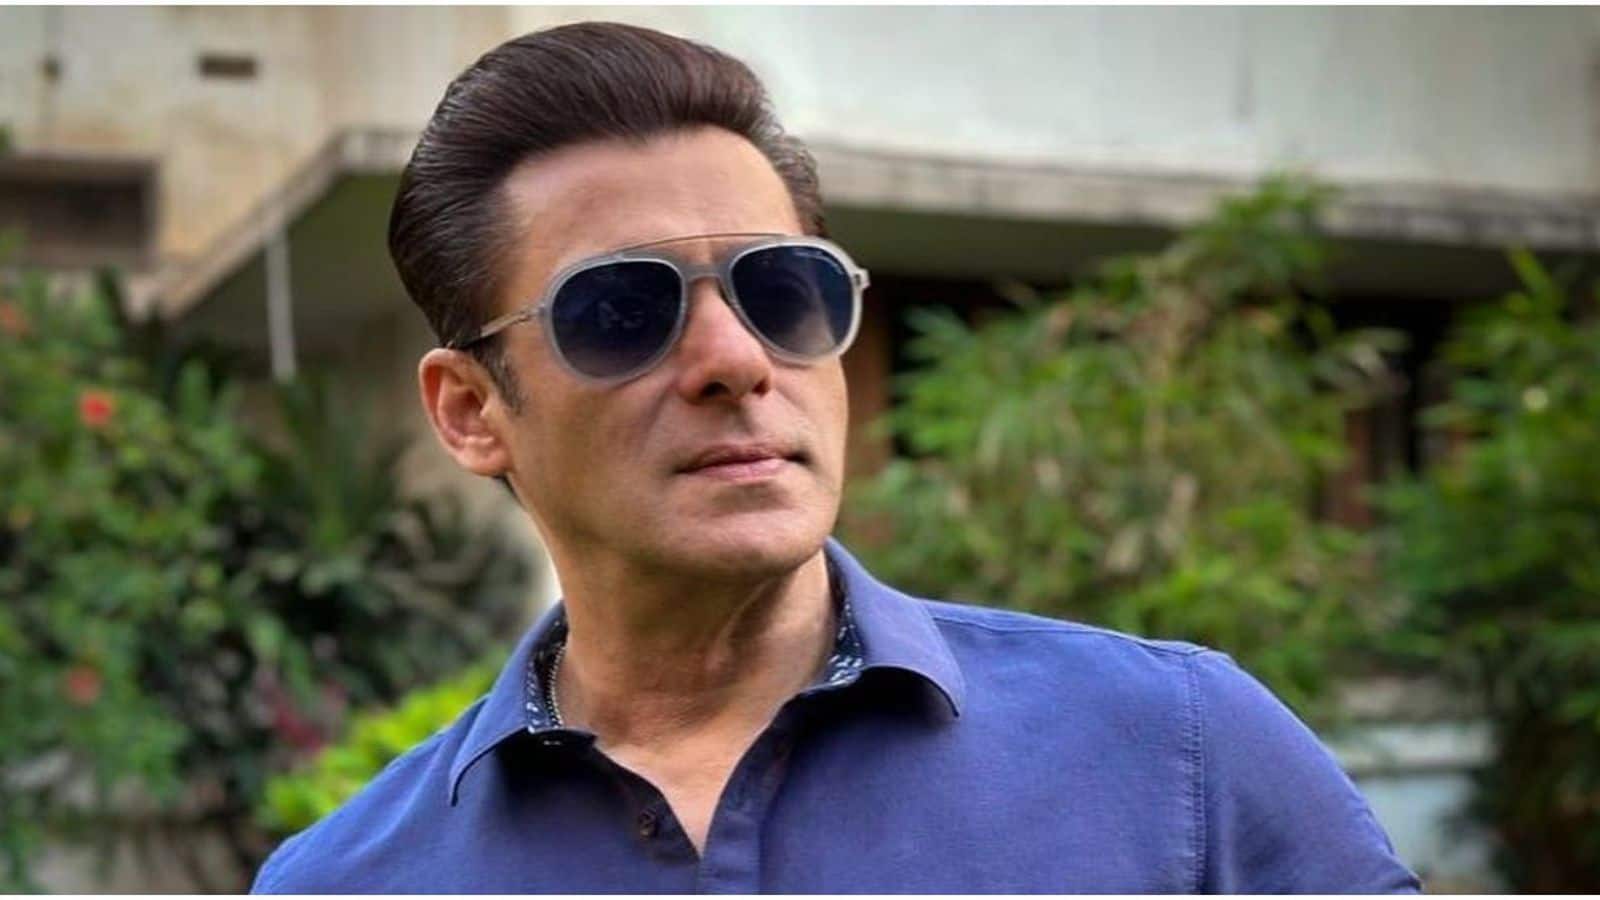 Salman Khan firing case: Accused's father refutes son's involvement